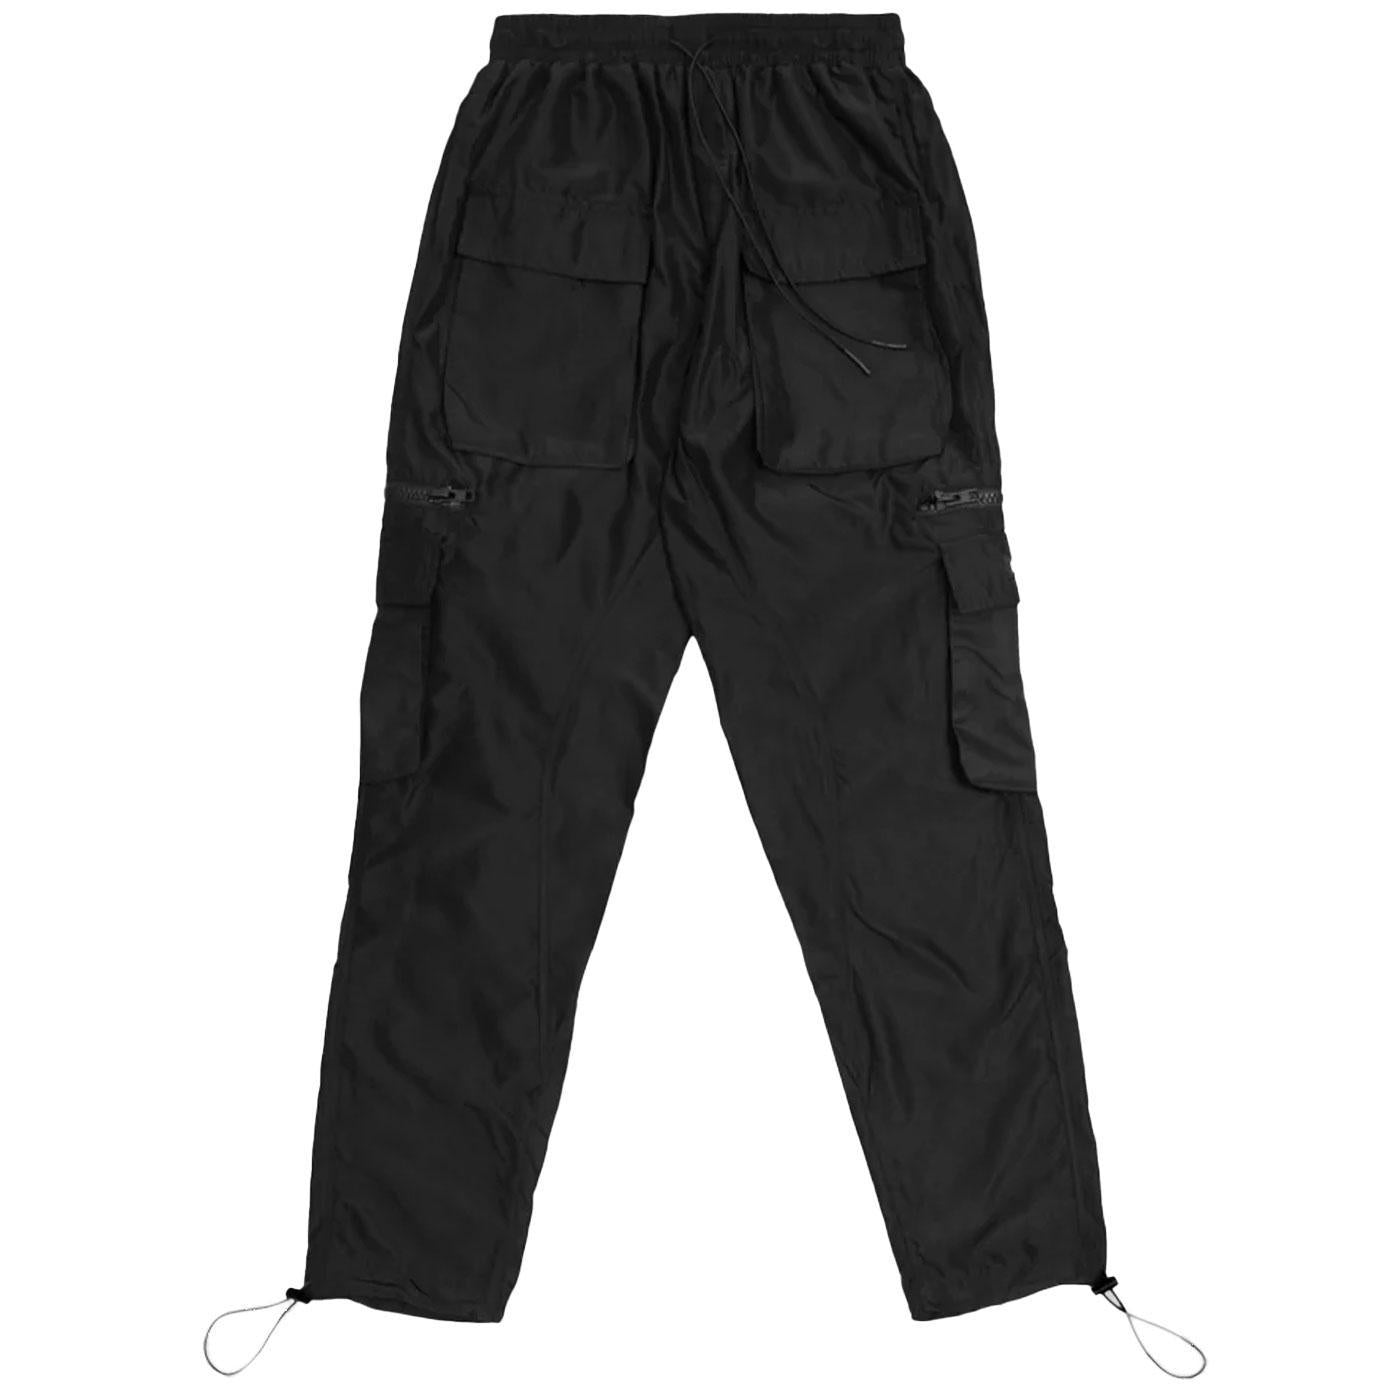 Everyday Nylon Cargo Pants Black 8and9 Clothing Co Urban Street Wear